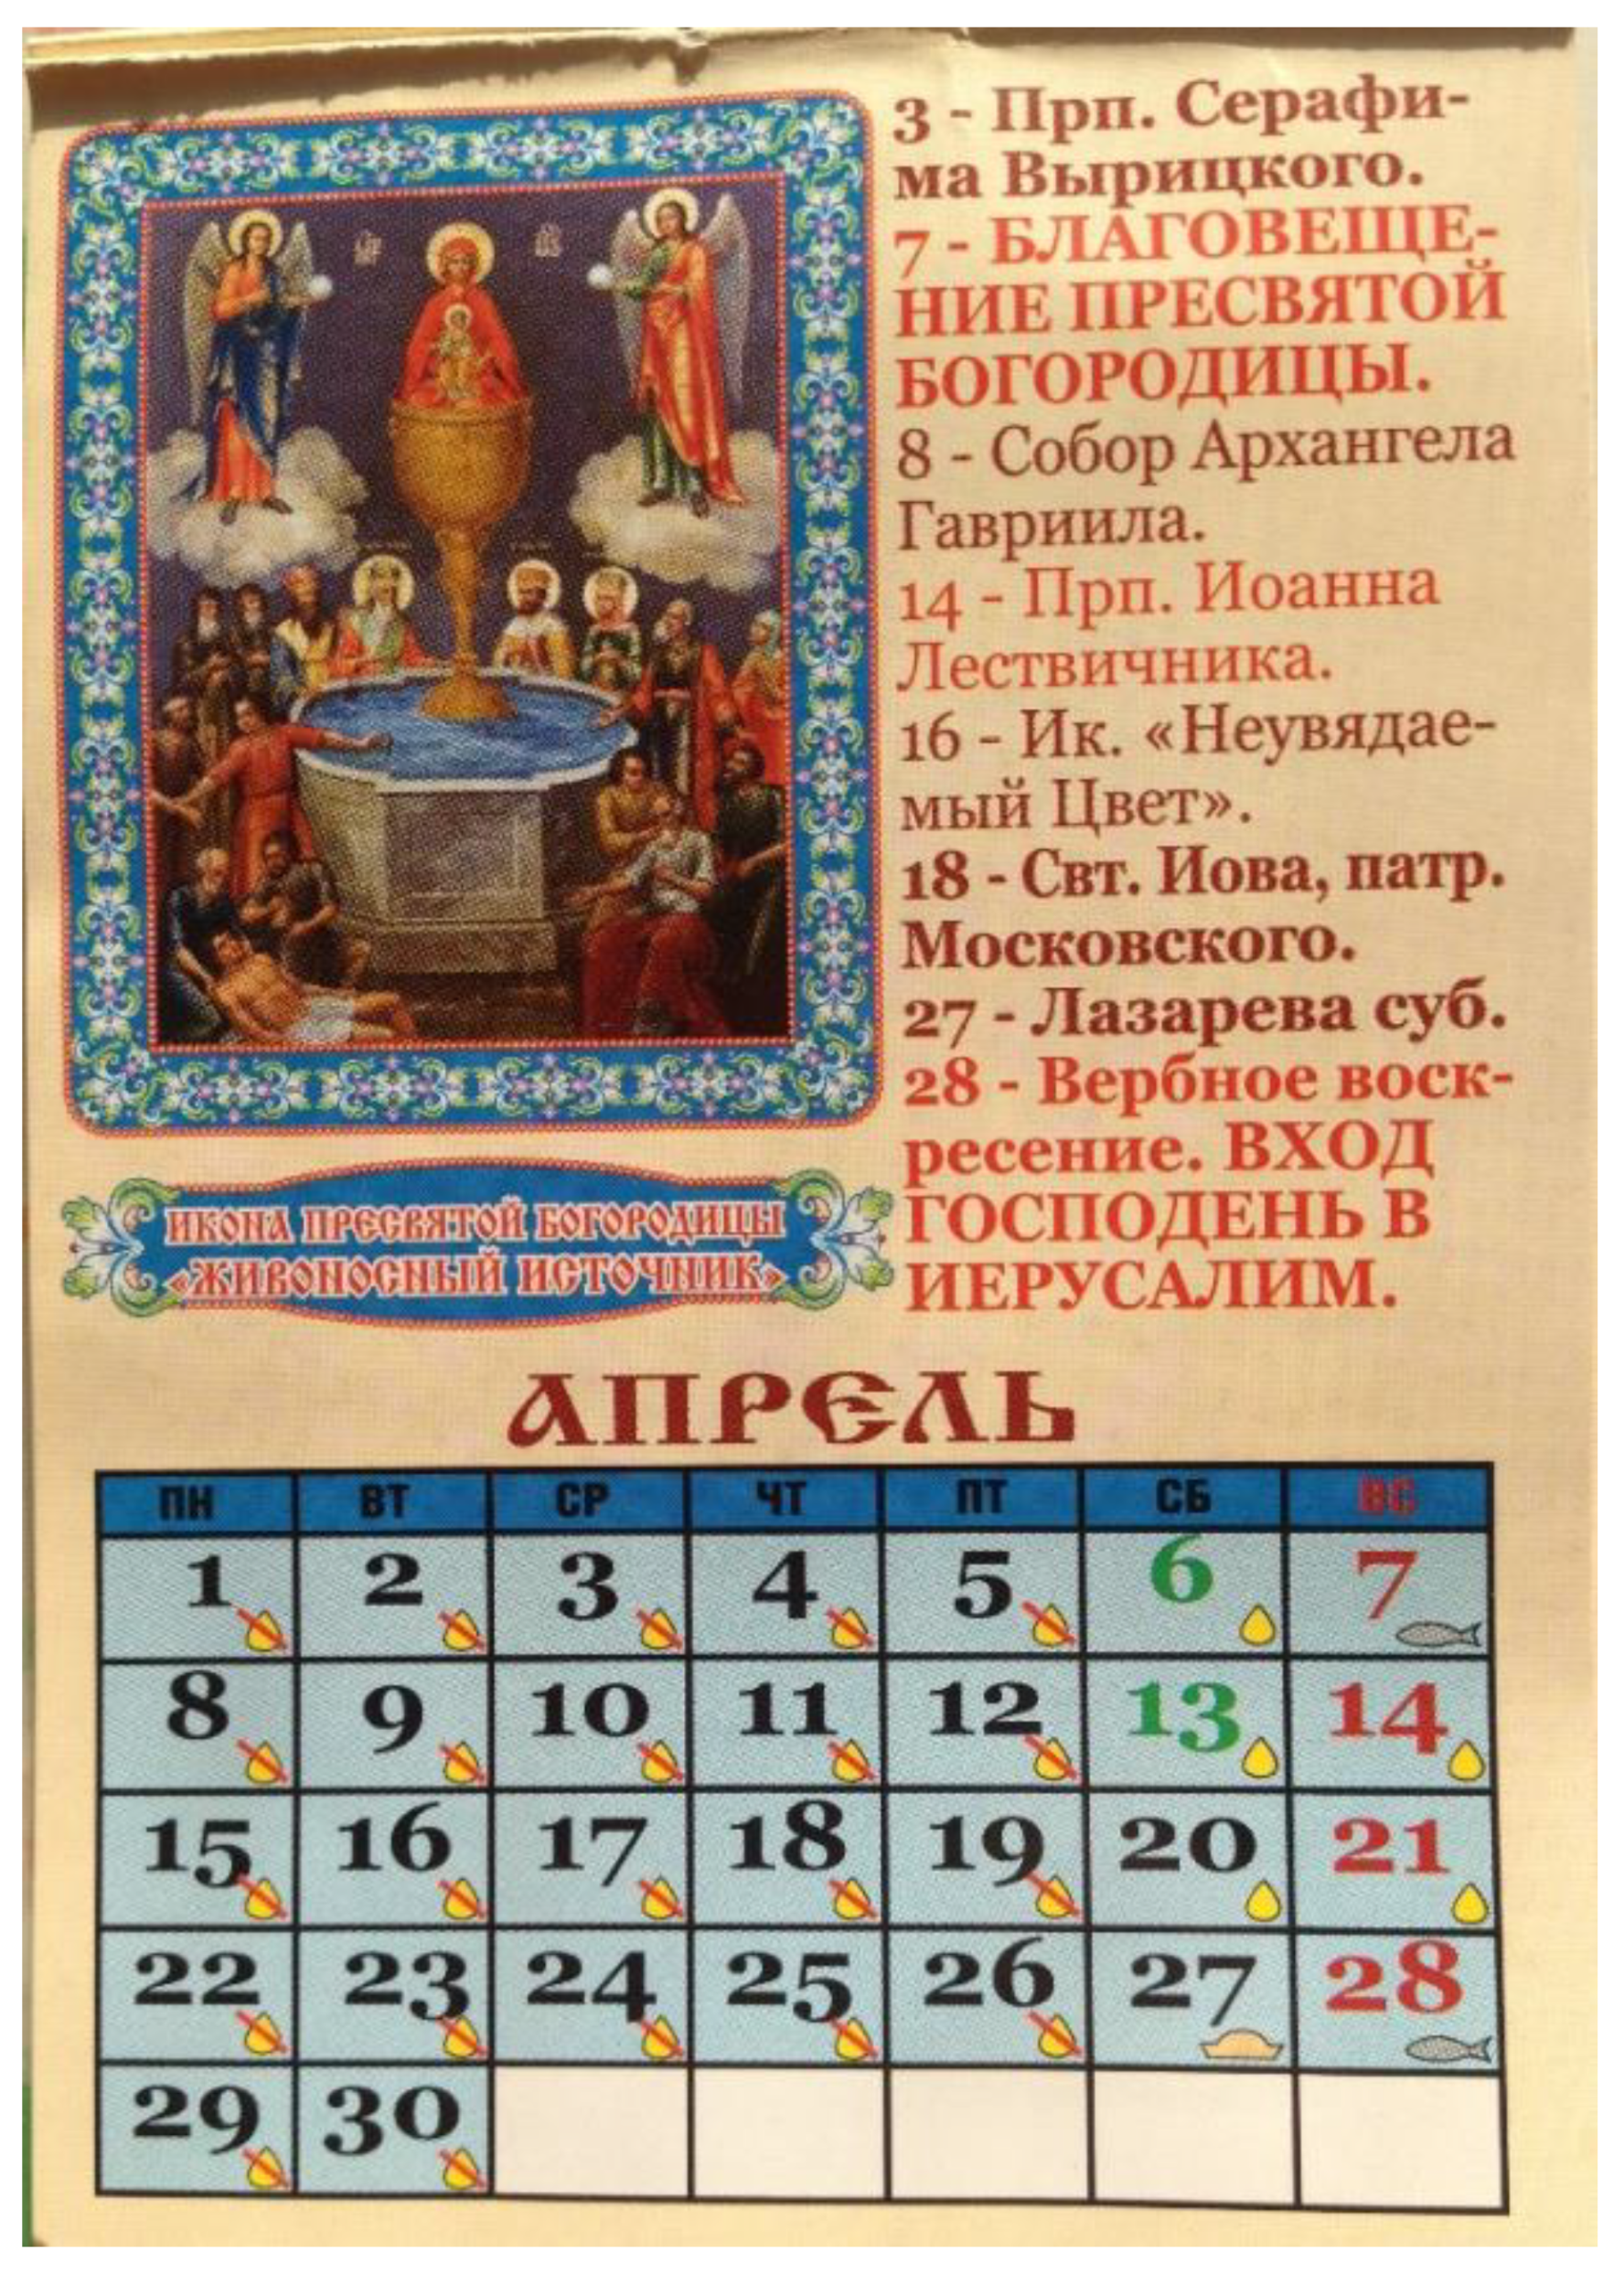 greek orthodox fasting calendar 2021 pdf monitoring.solarquest.in